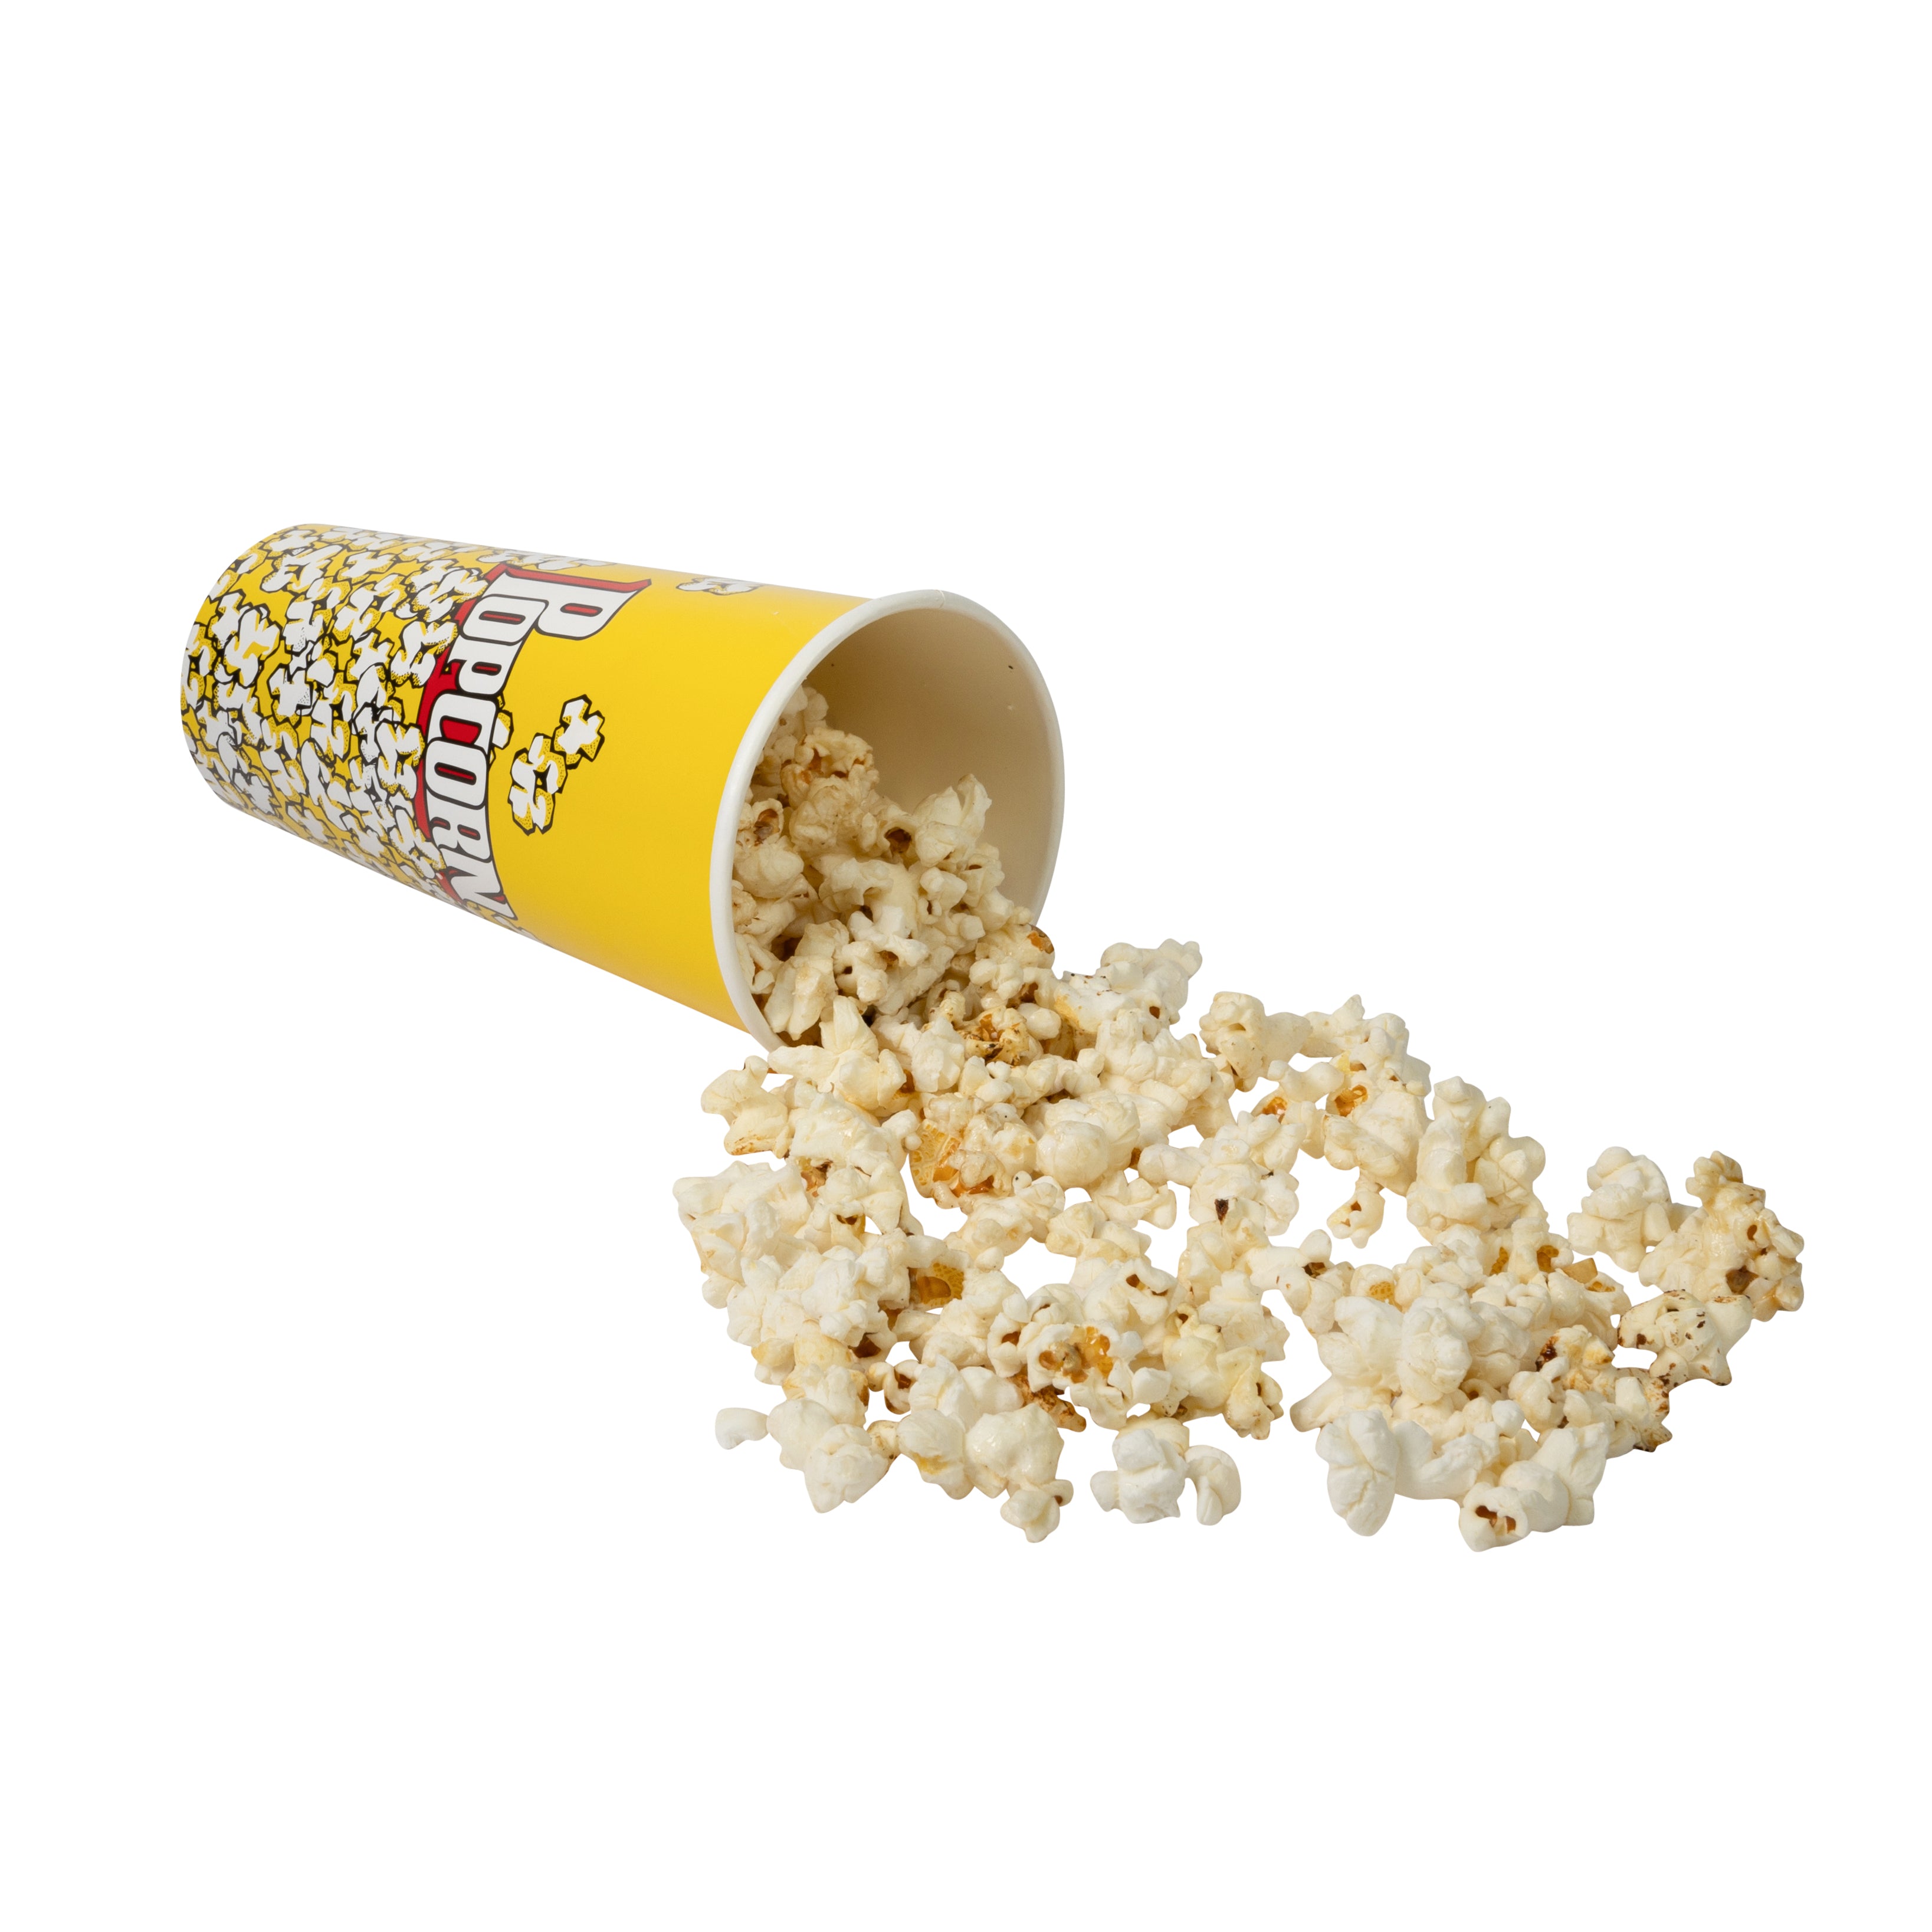 24oz Cinema-Style Popcorn Tubs